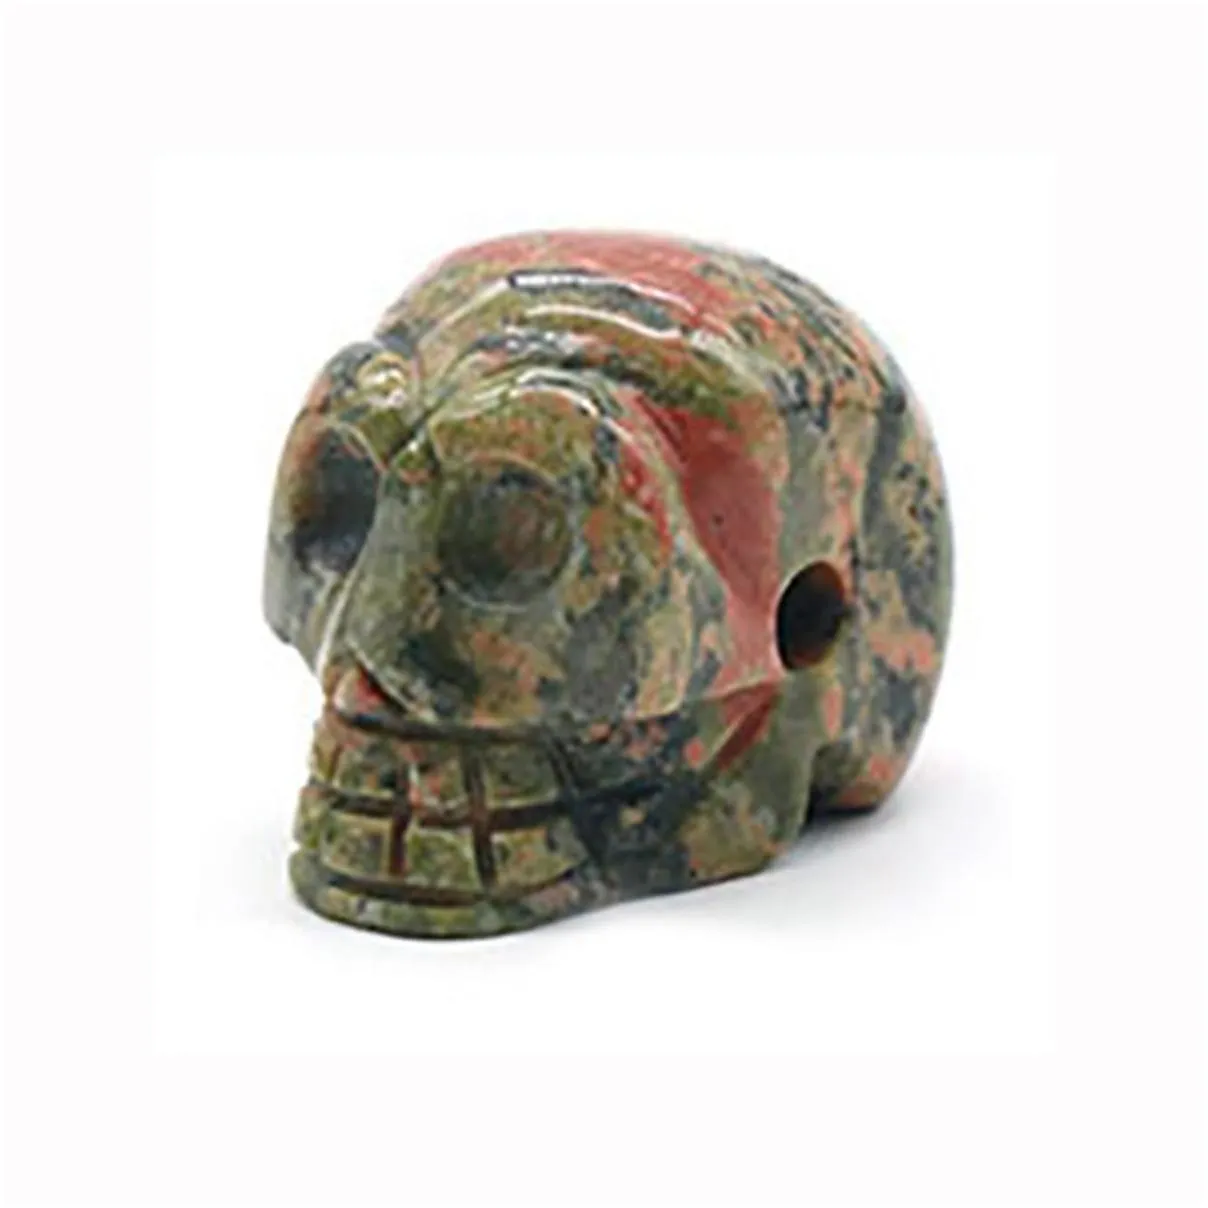 23mm Carnlian Skull Head Statue Hand Carved Gemstone Human Skeleton Head Figurines Reiki Healing Stone for Home Office Decoration